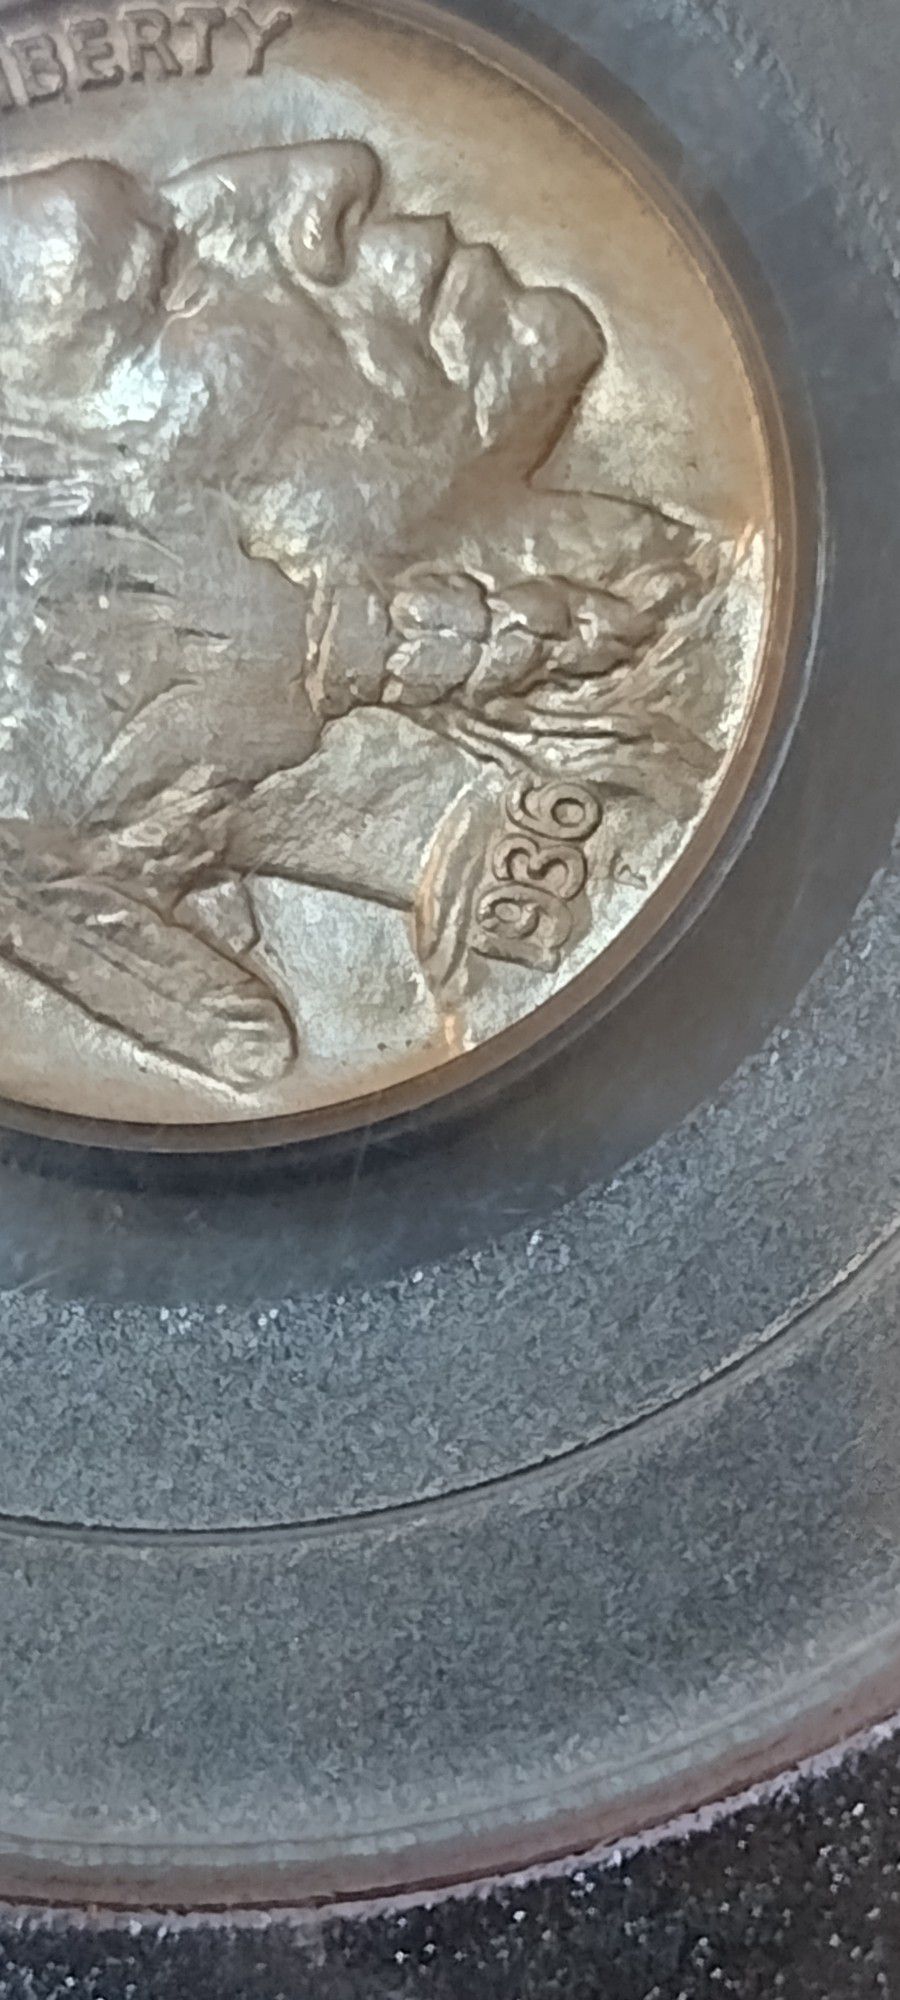 1936 Ms 65 Indian Head Nickel 